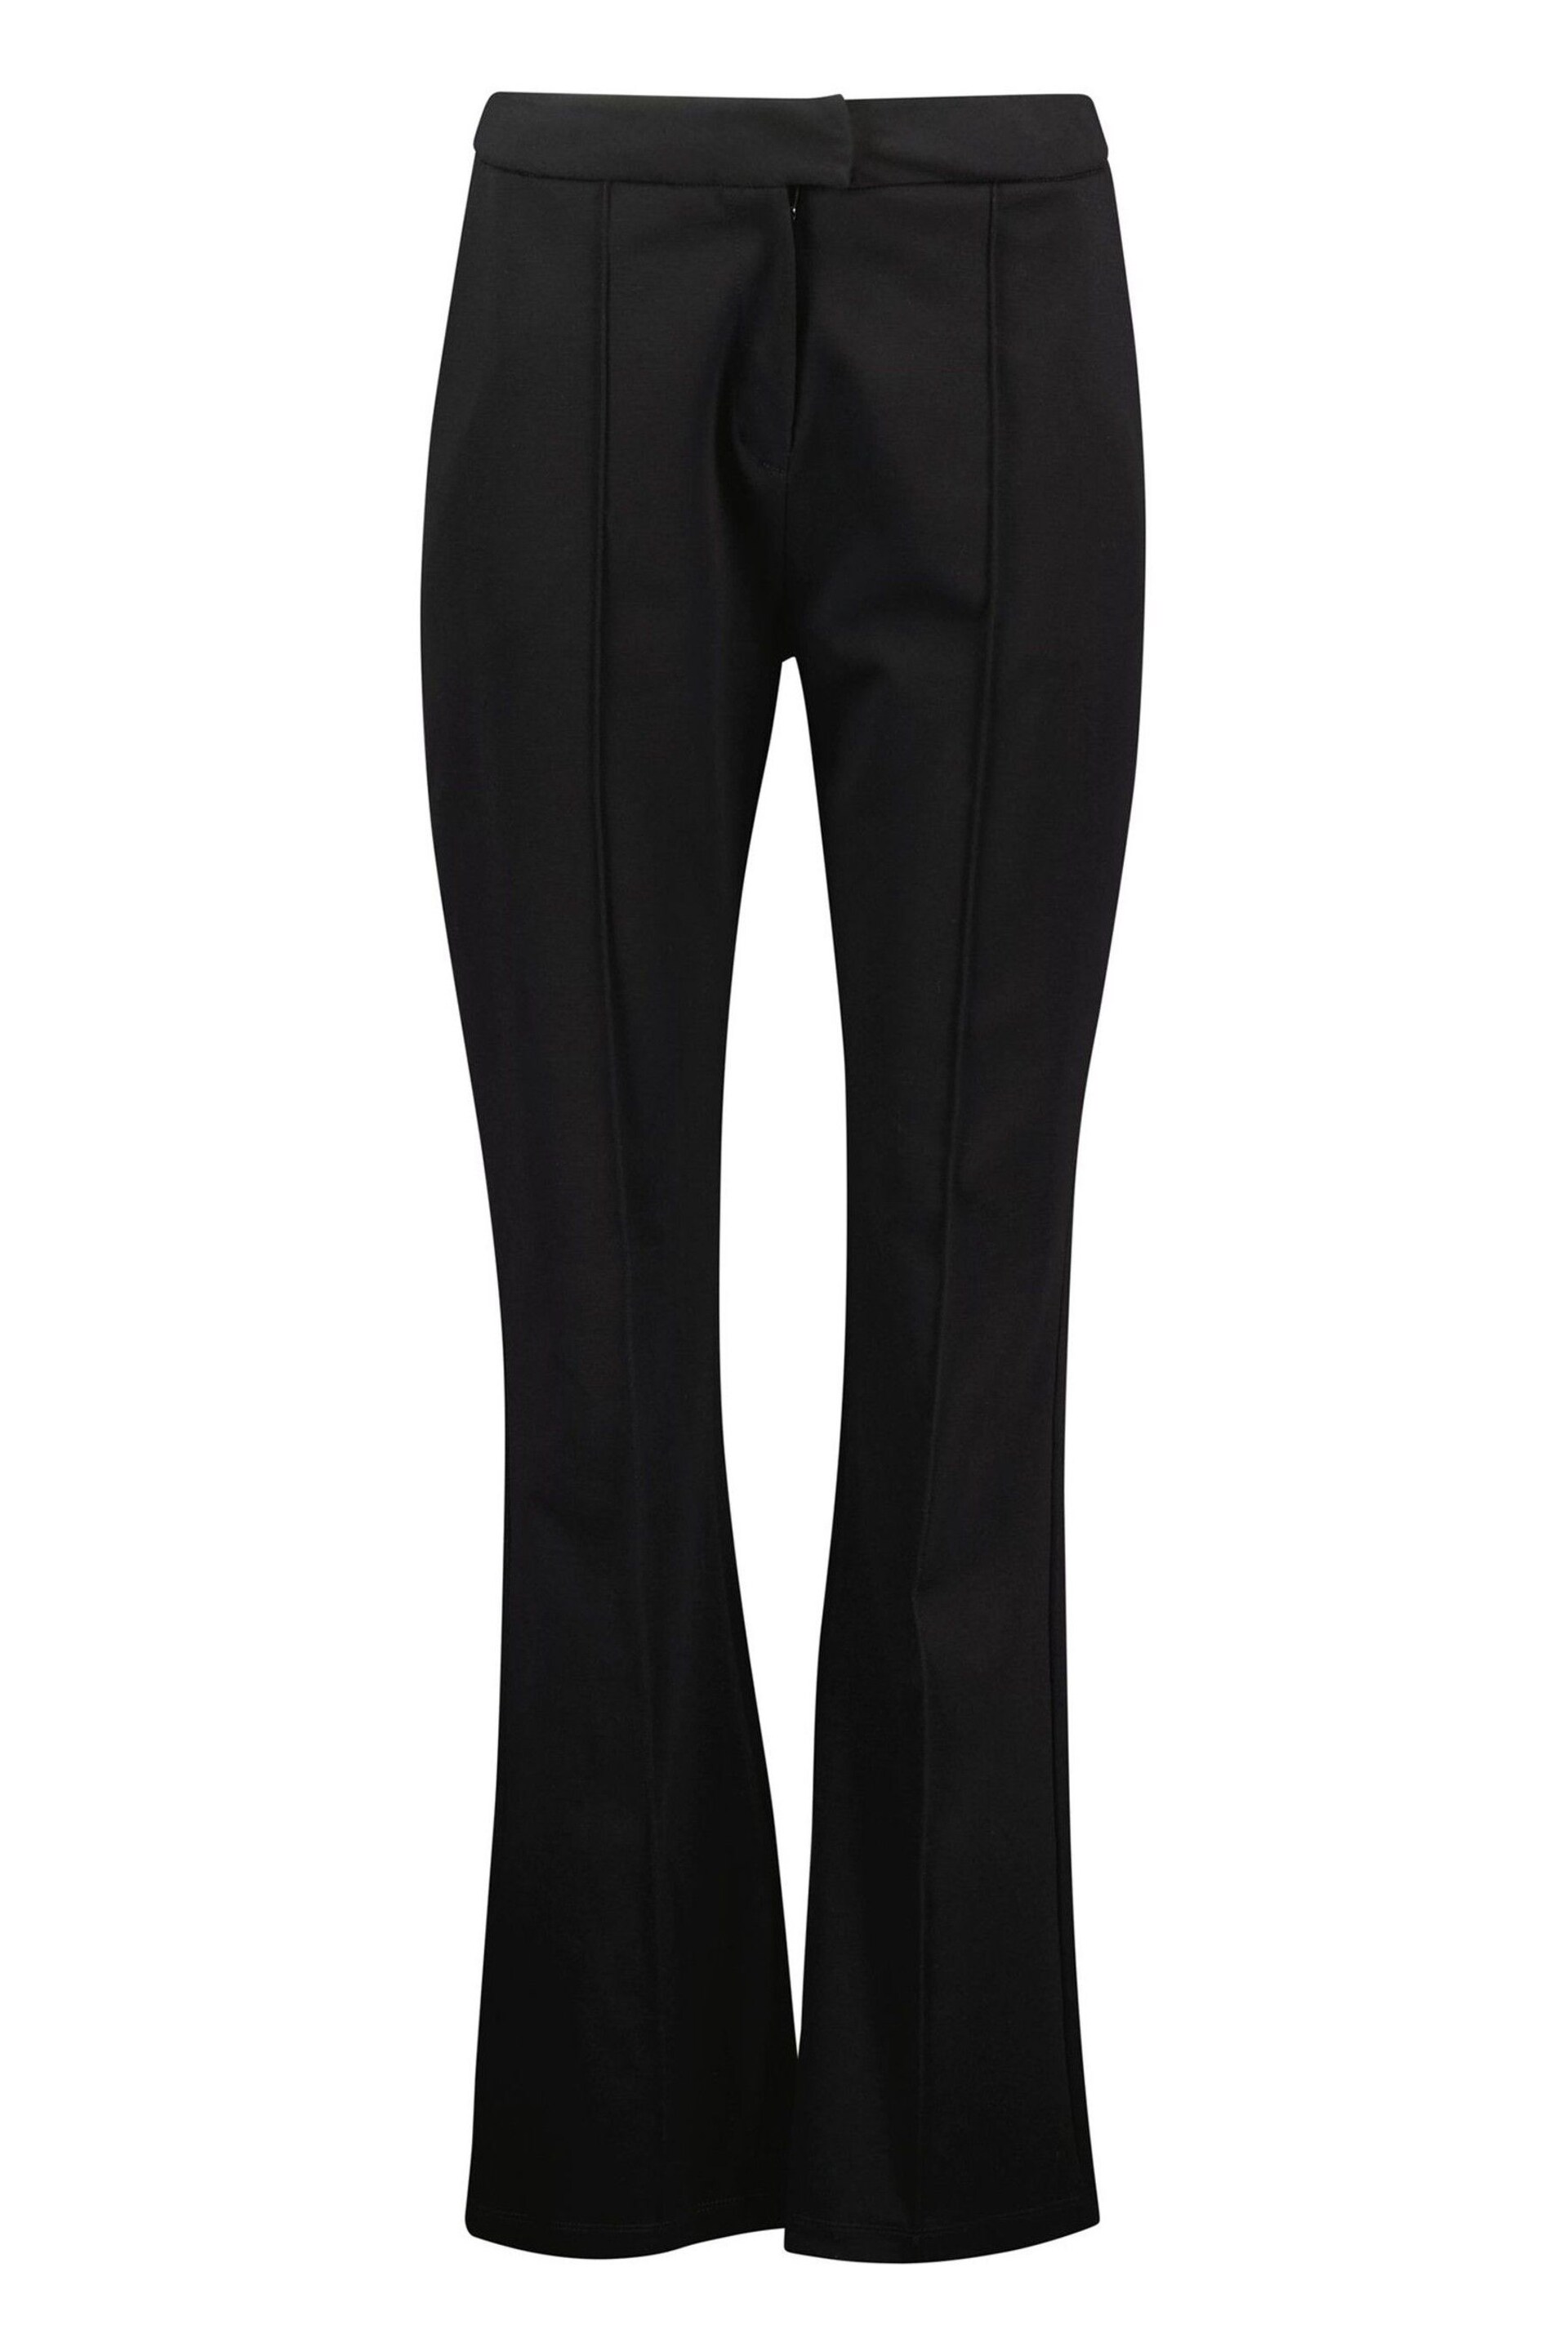 Baukjen Black Rae Trousers with Lenzing™ Ecovero™ - Image 6 of 7